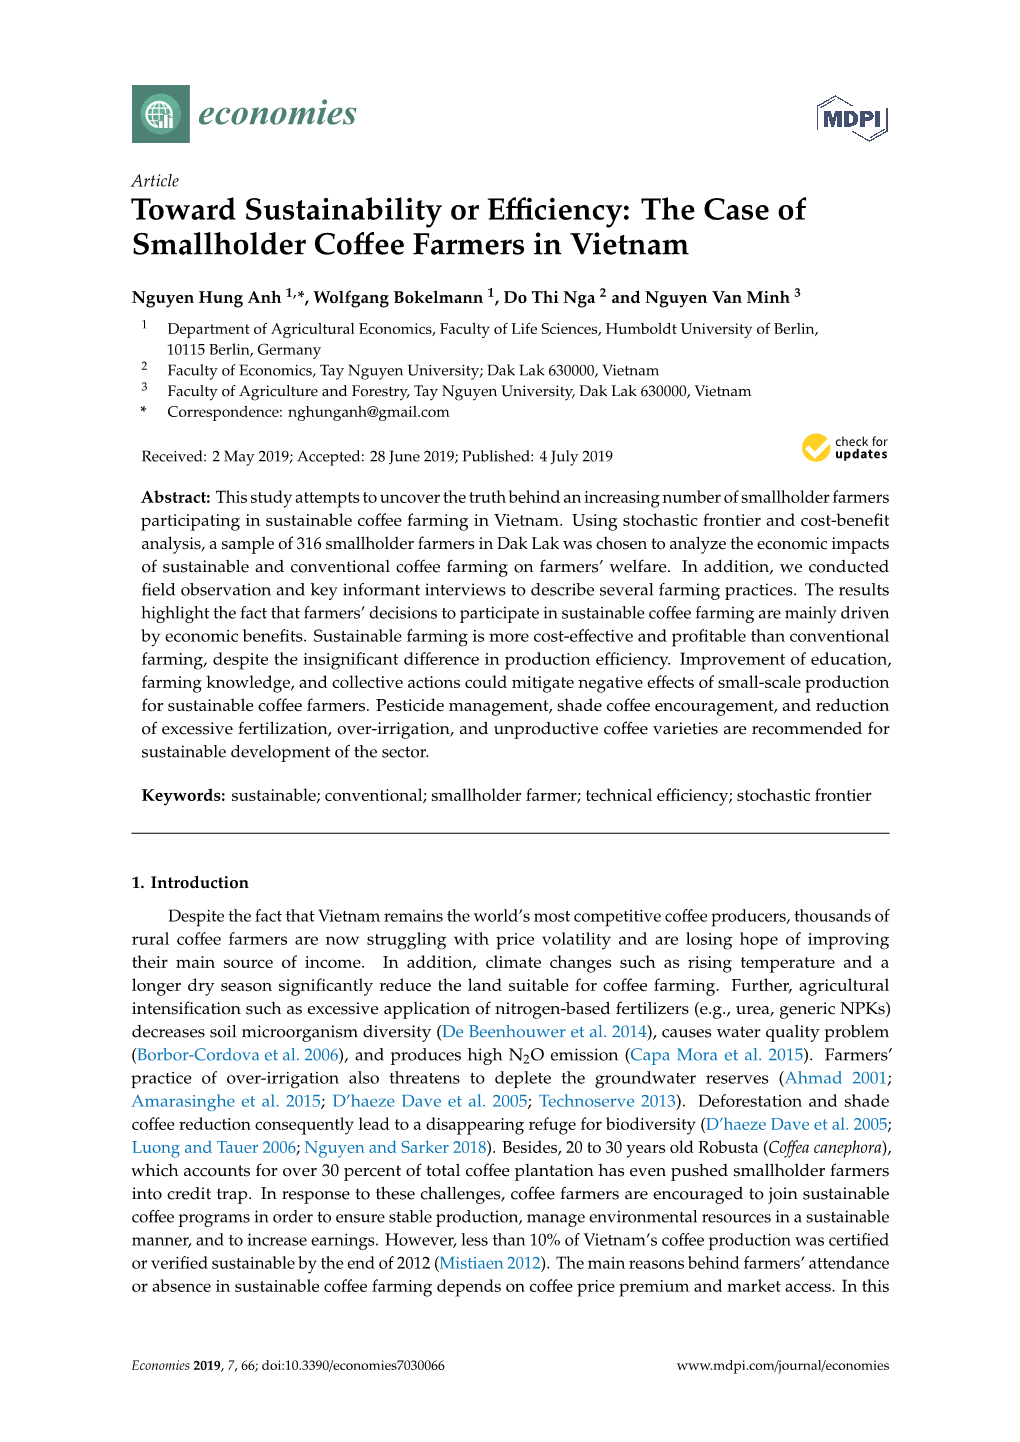 Toward Sustainability Or Efficiency: the Case of Smallholder Coffee Farmers in Vietnam